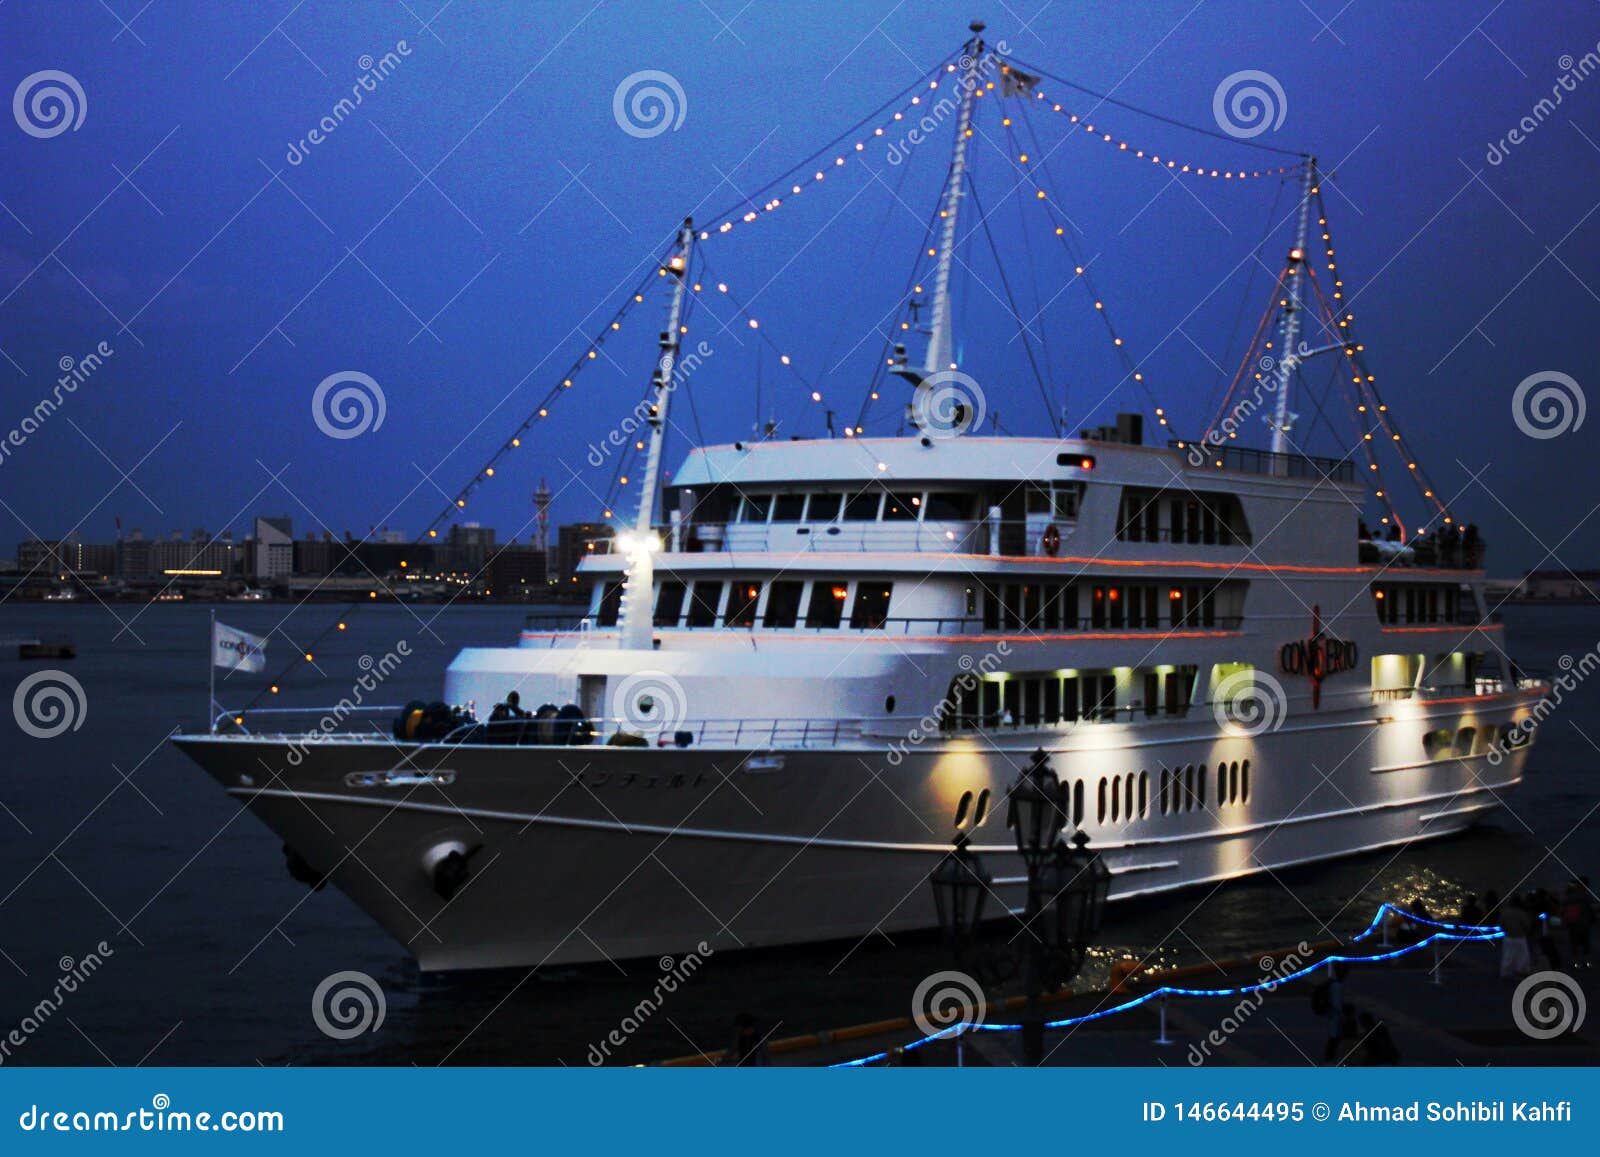 picture of concerto ship landed in kobe harbor land port taken in the evening